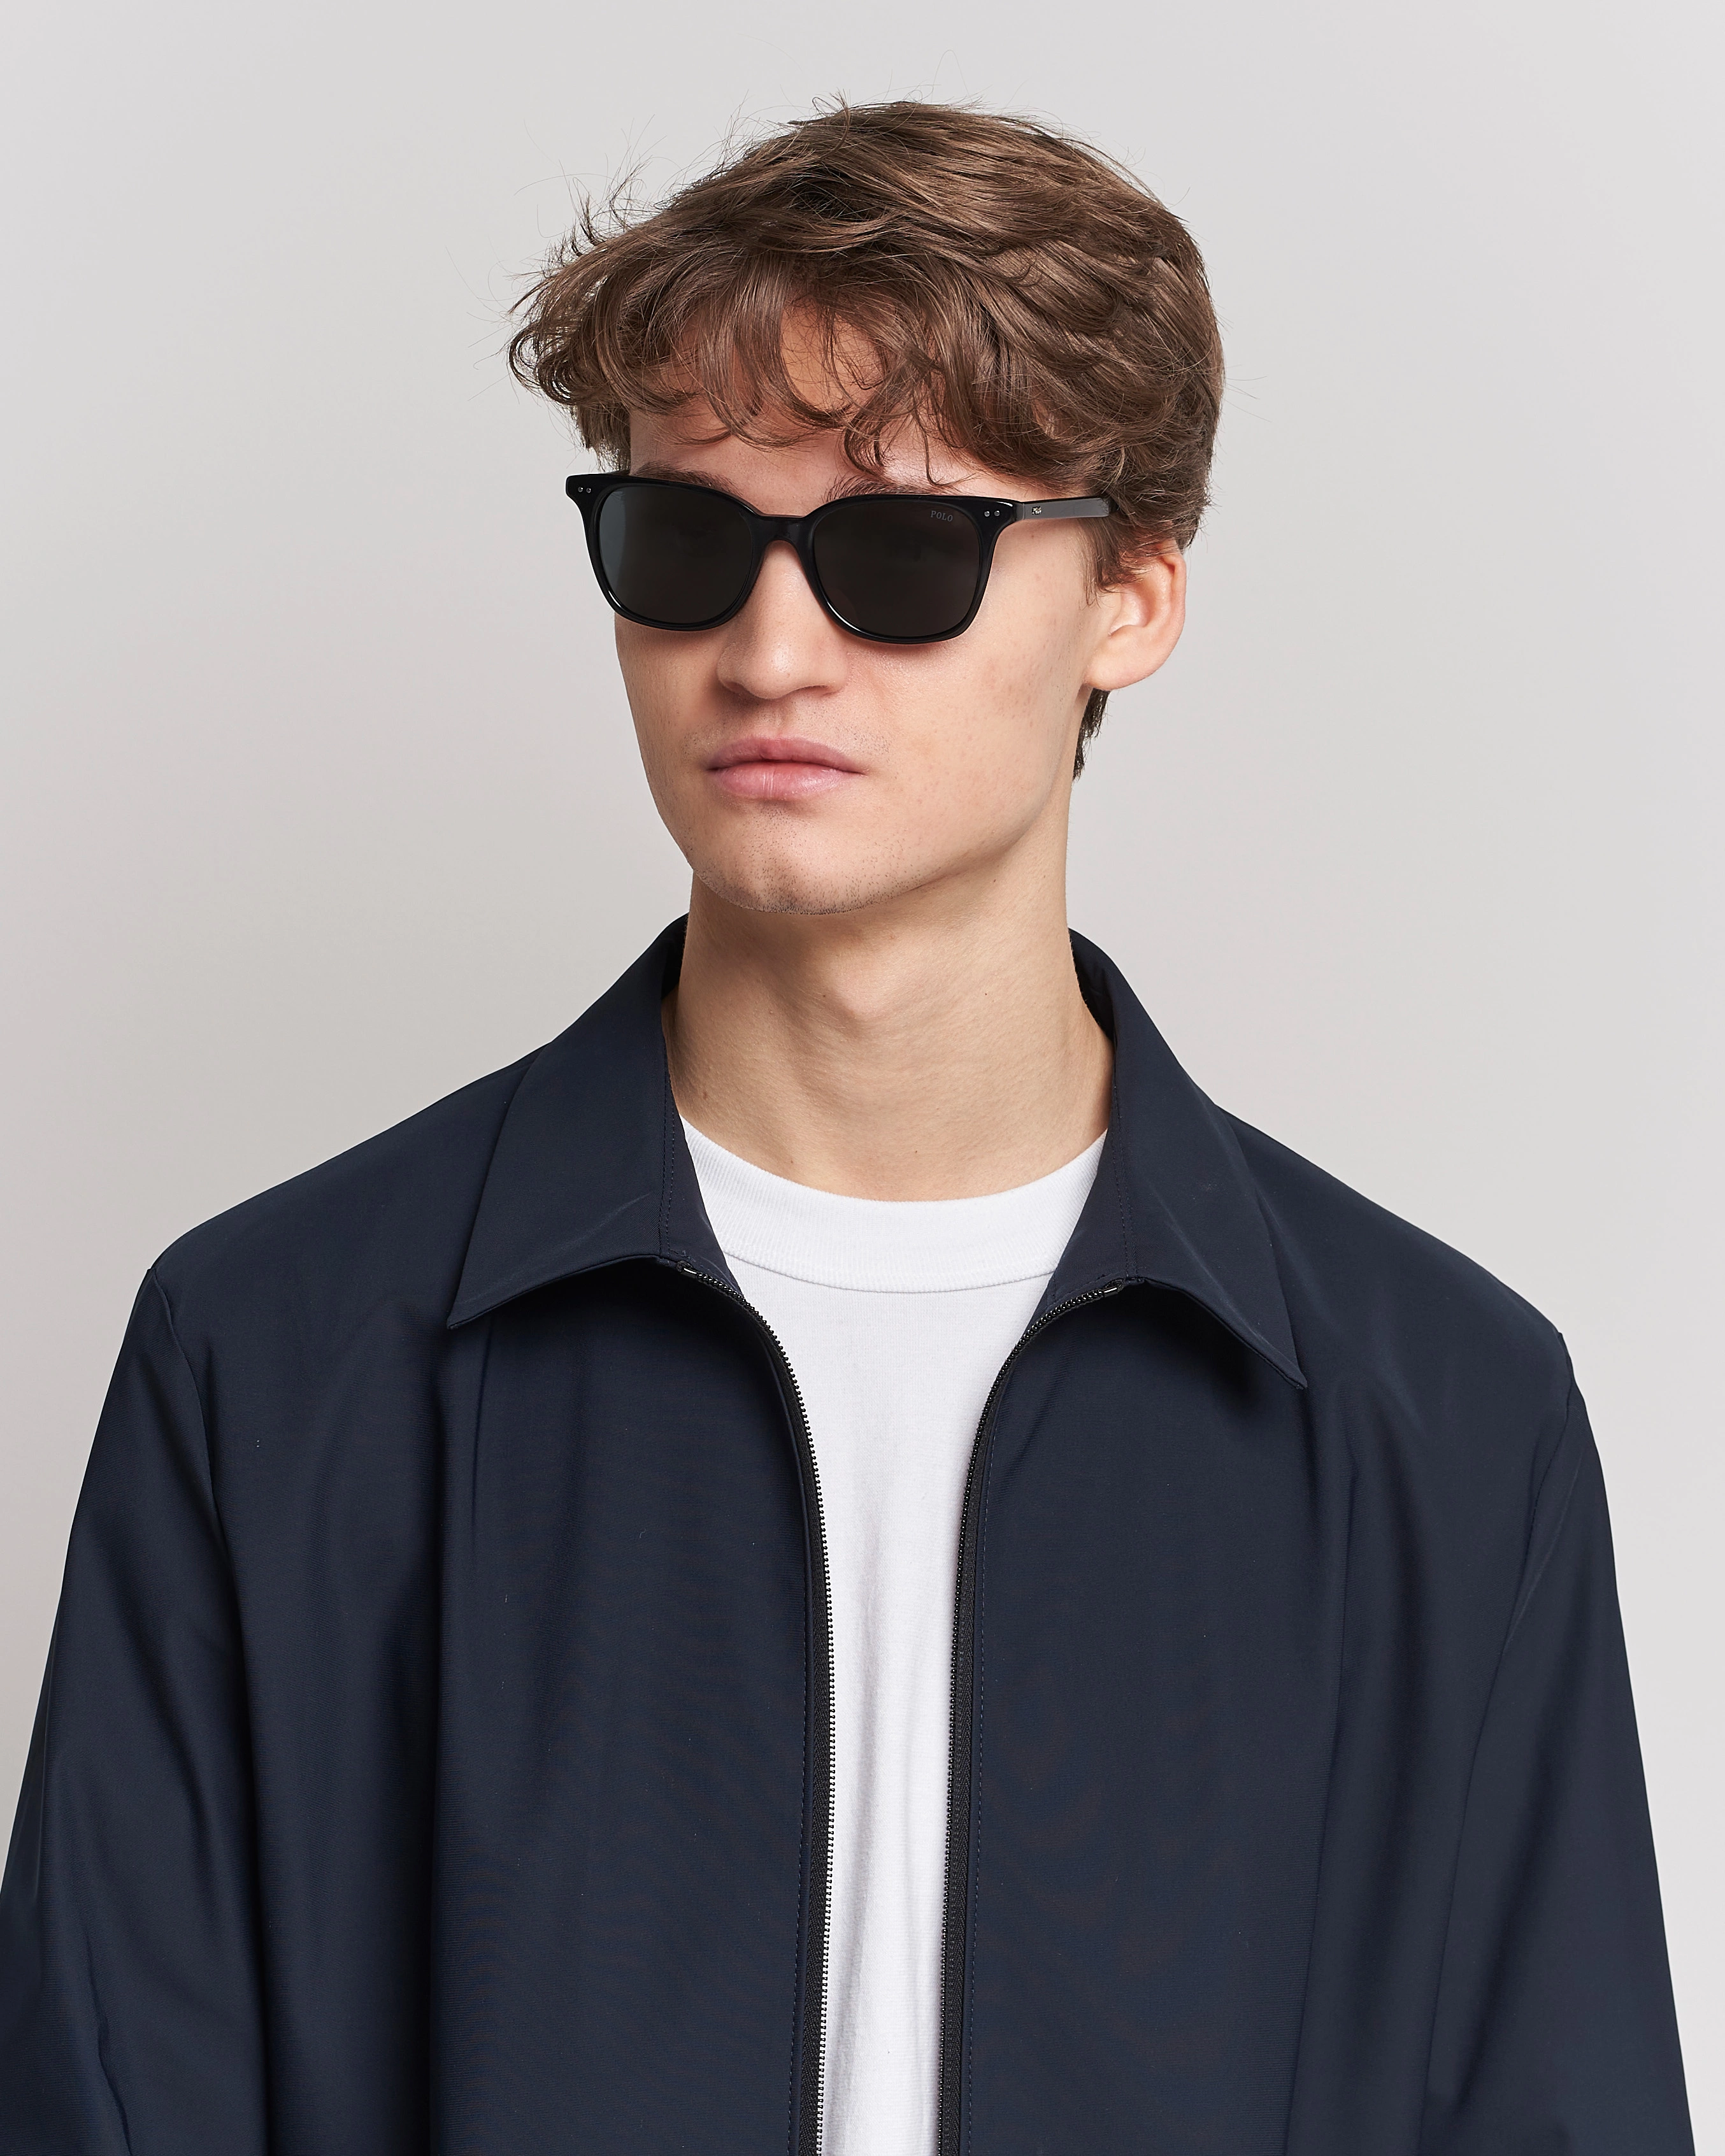 Mies |  | Polo Ralph Lauren | 0PH4187 Sunglasses Shiny Black